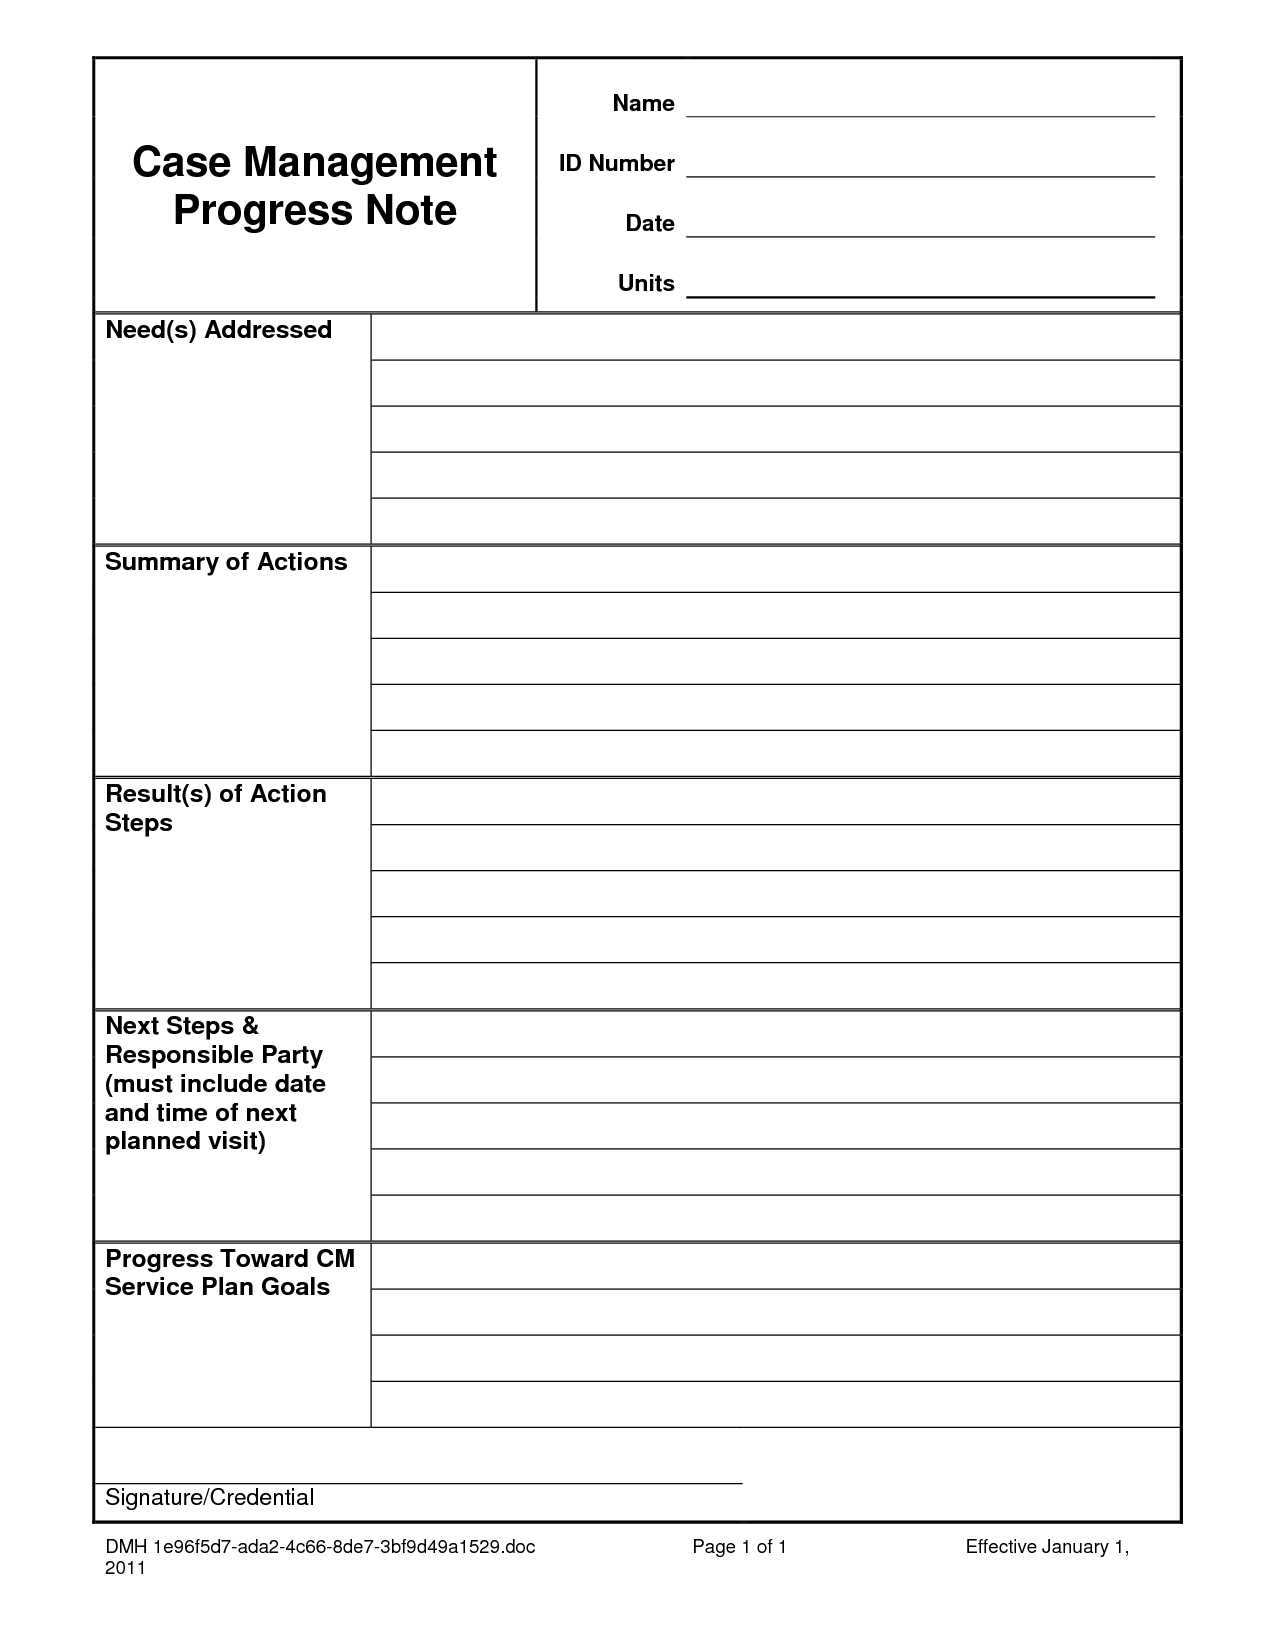 Self Esteem Worksheets Pdf together with Case Notes Template Case Management Progress Note Doc